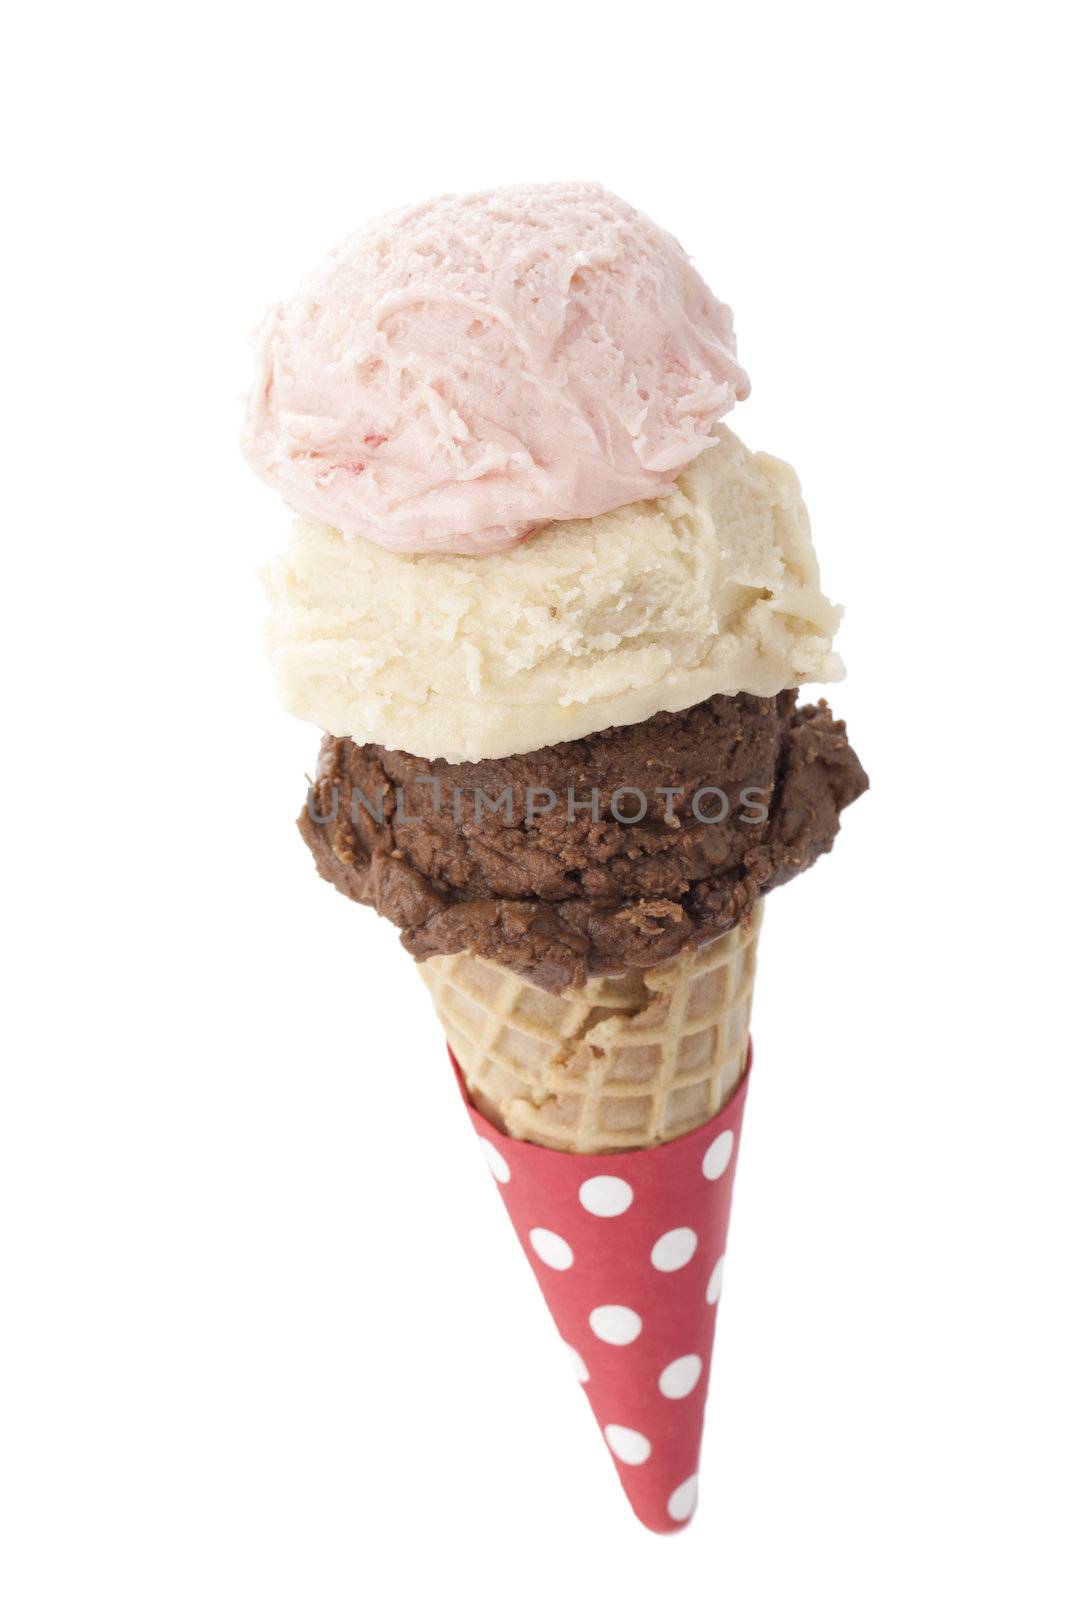 Three scoops of ice cream in a sugar cone over white background